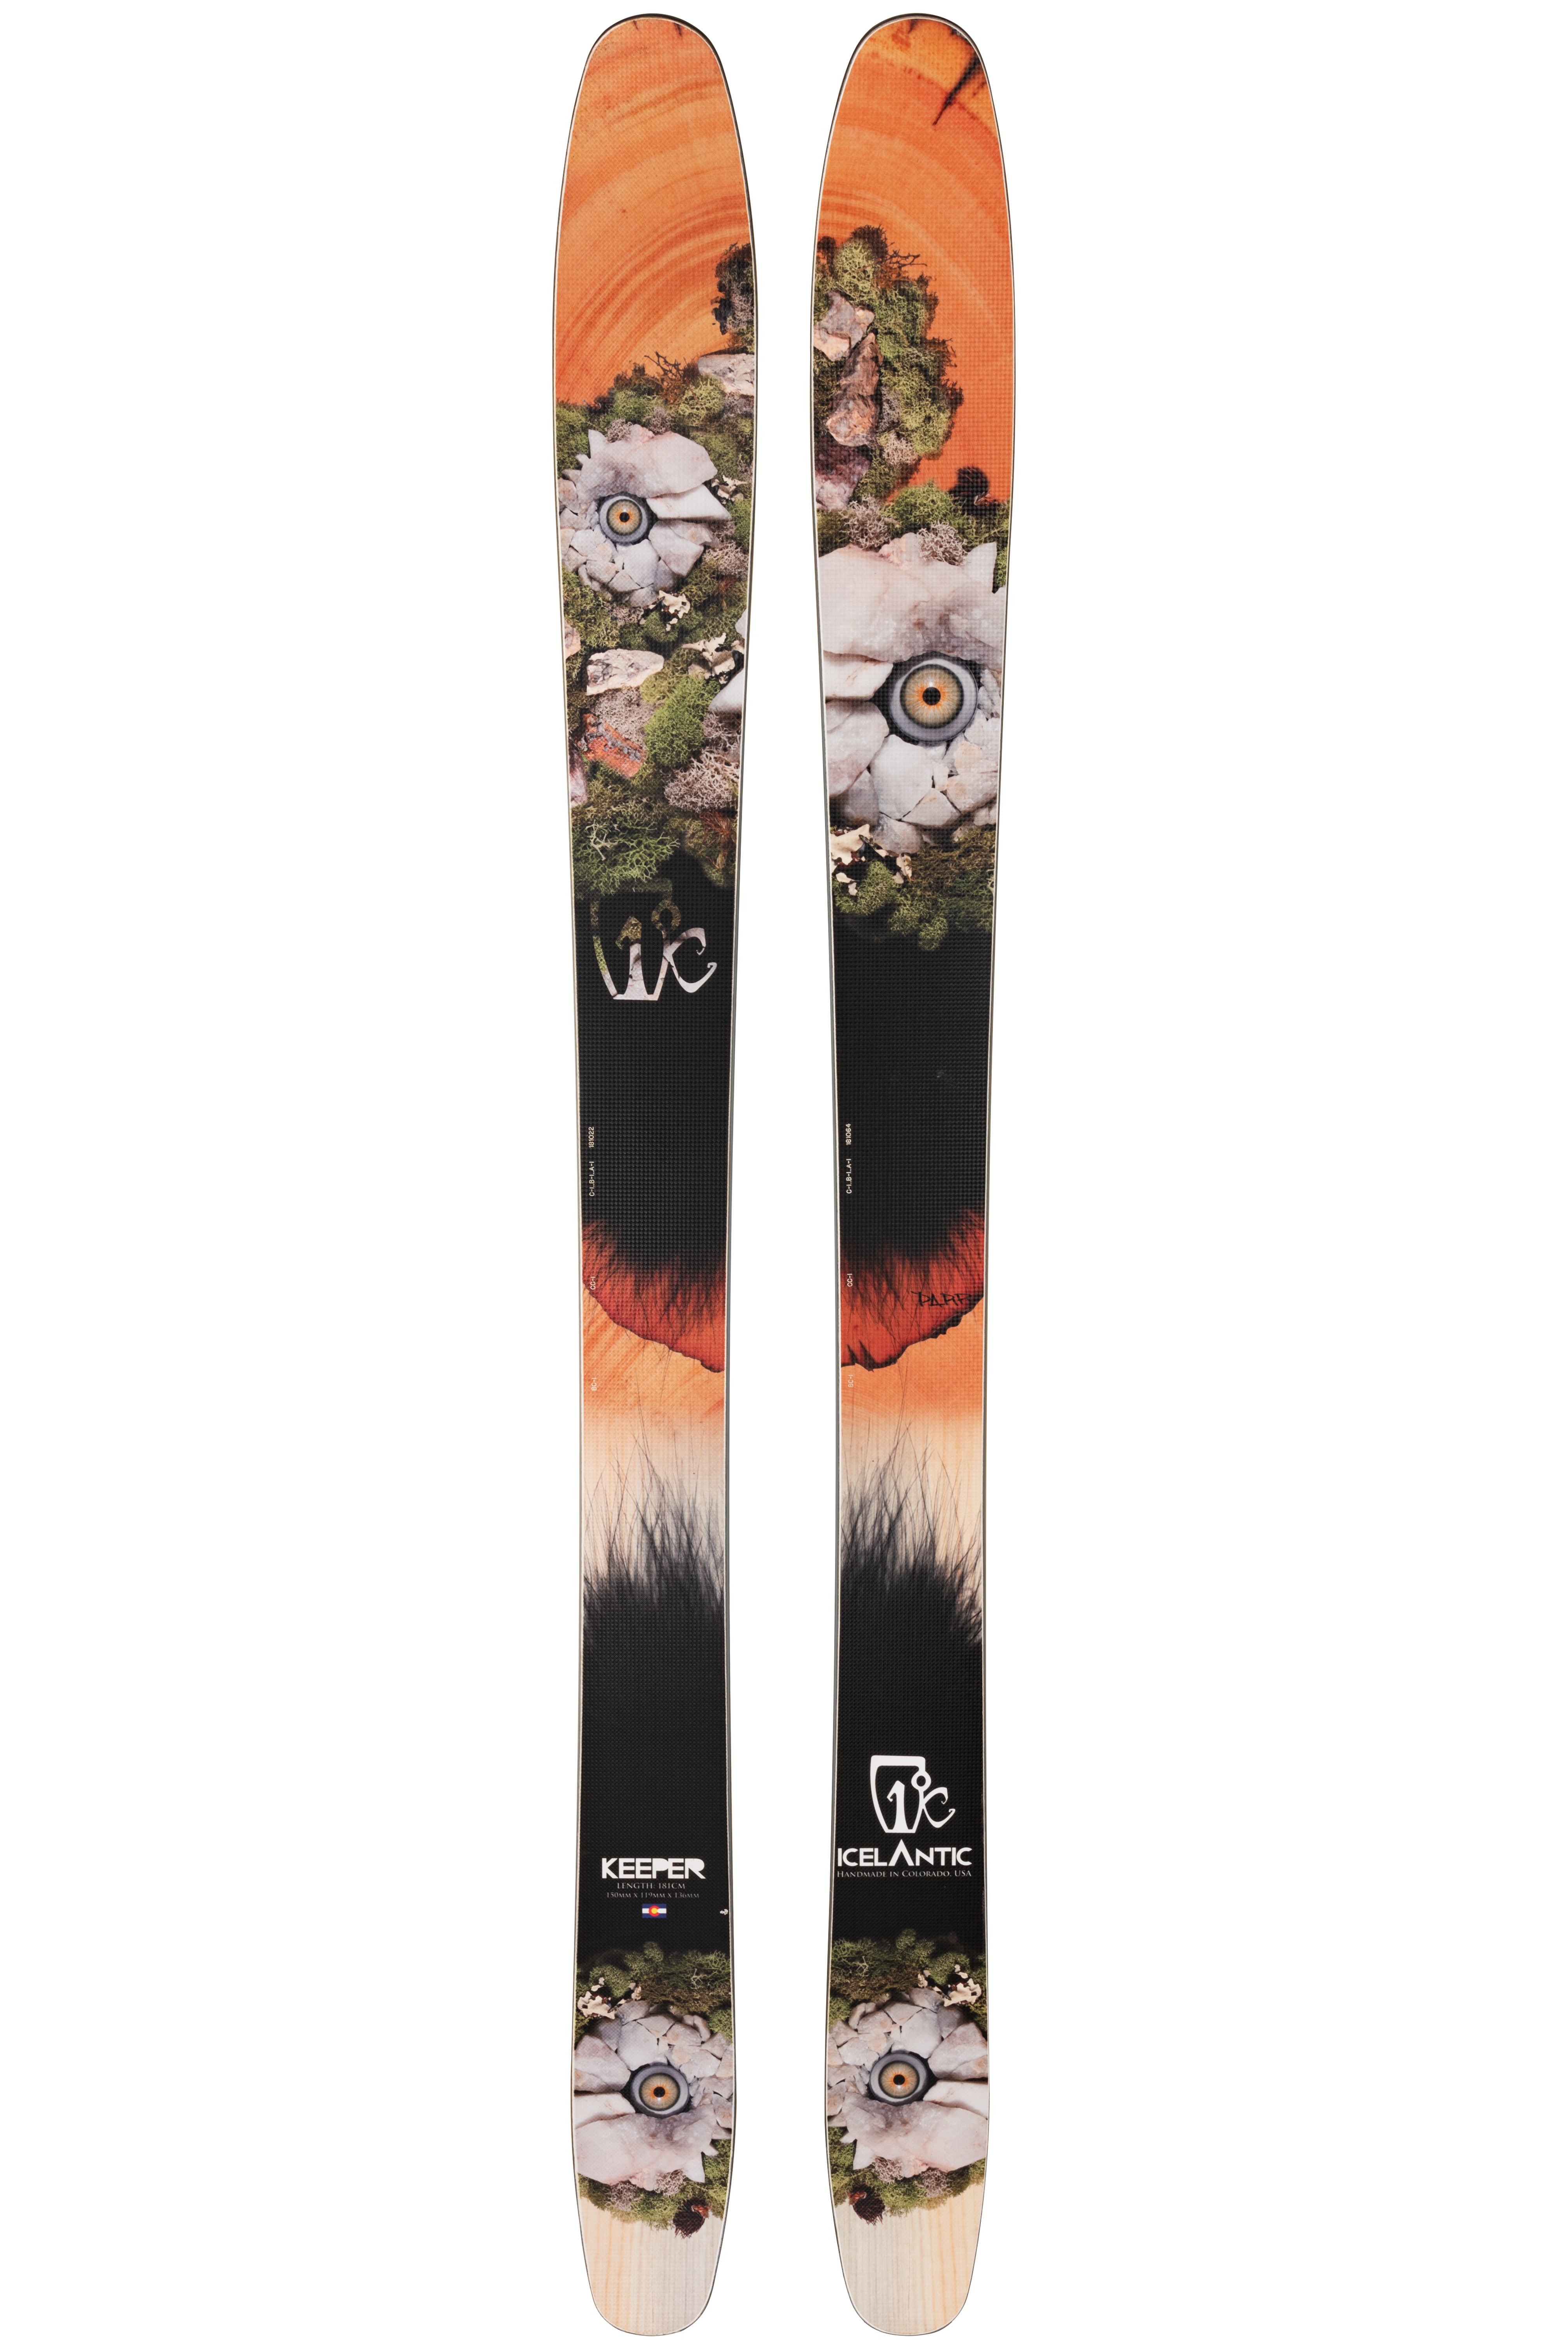 Лыжи для фрирайда Icelantic Keeper 119 2013/2014 181cm